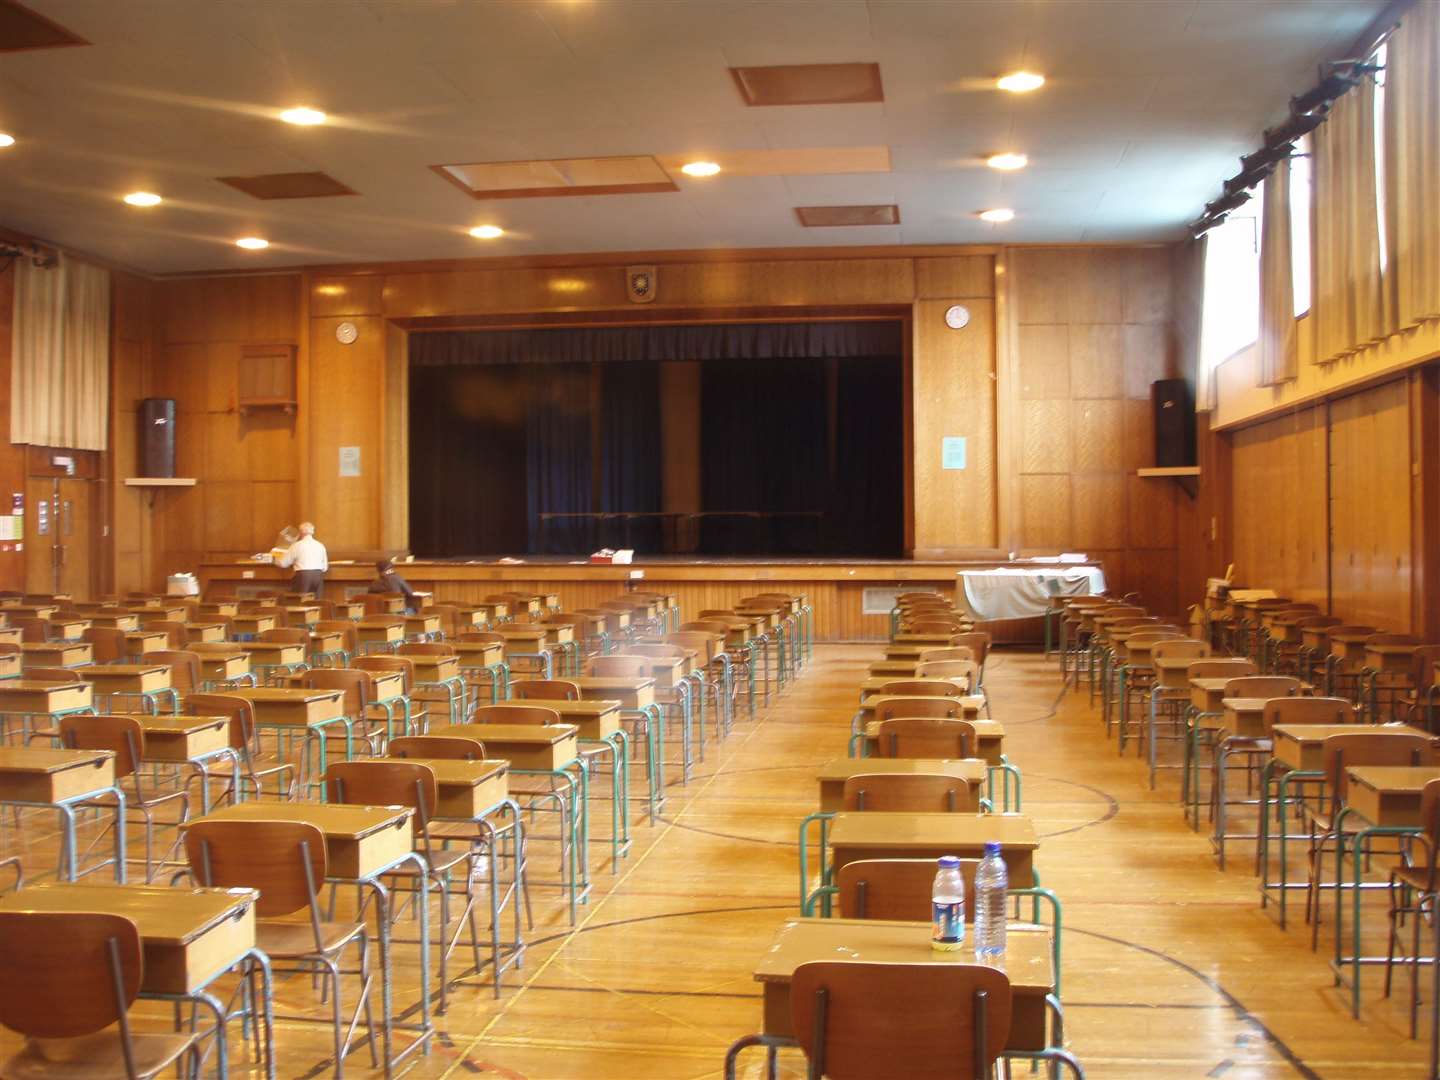 School hall set for exams